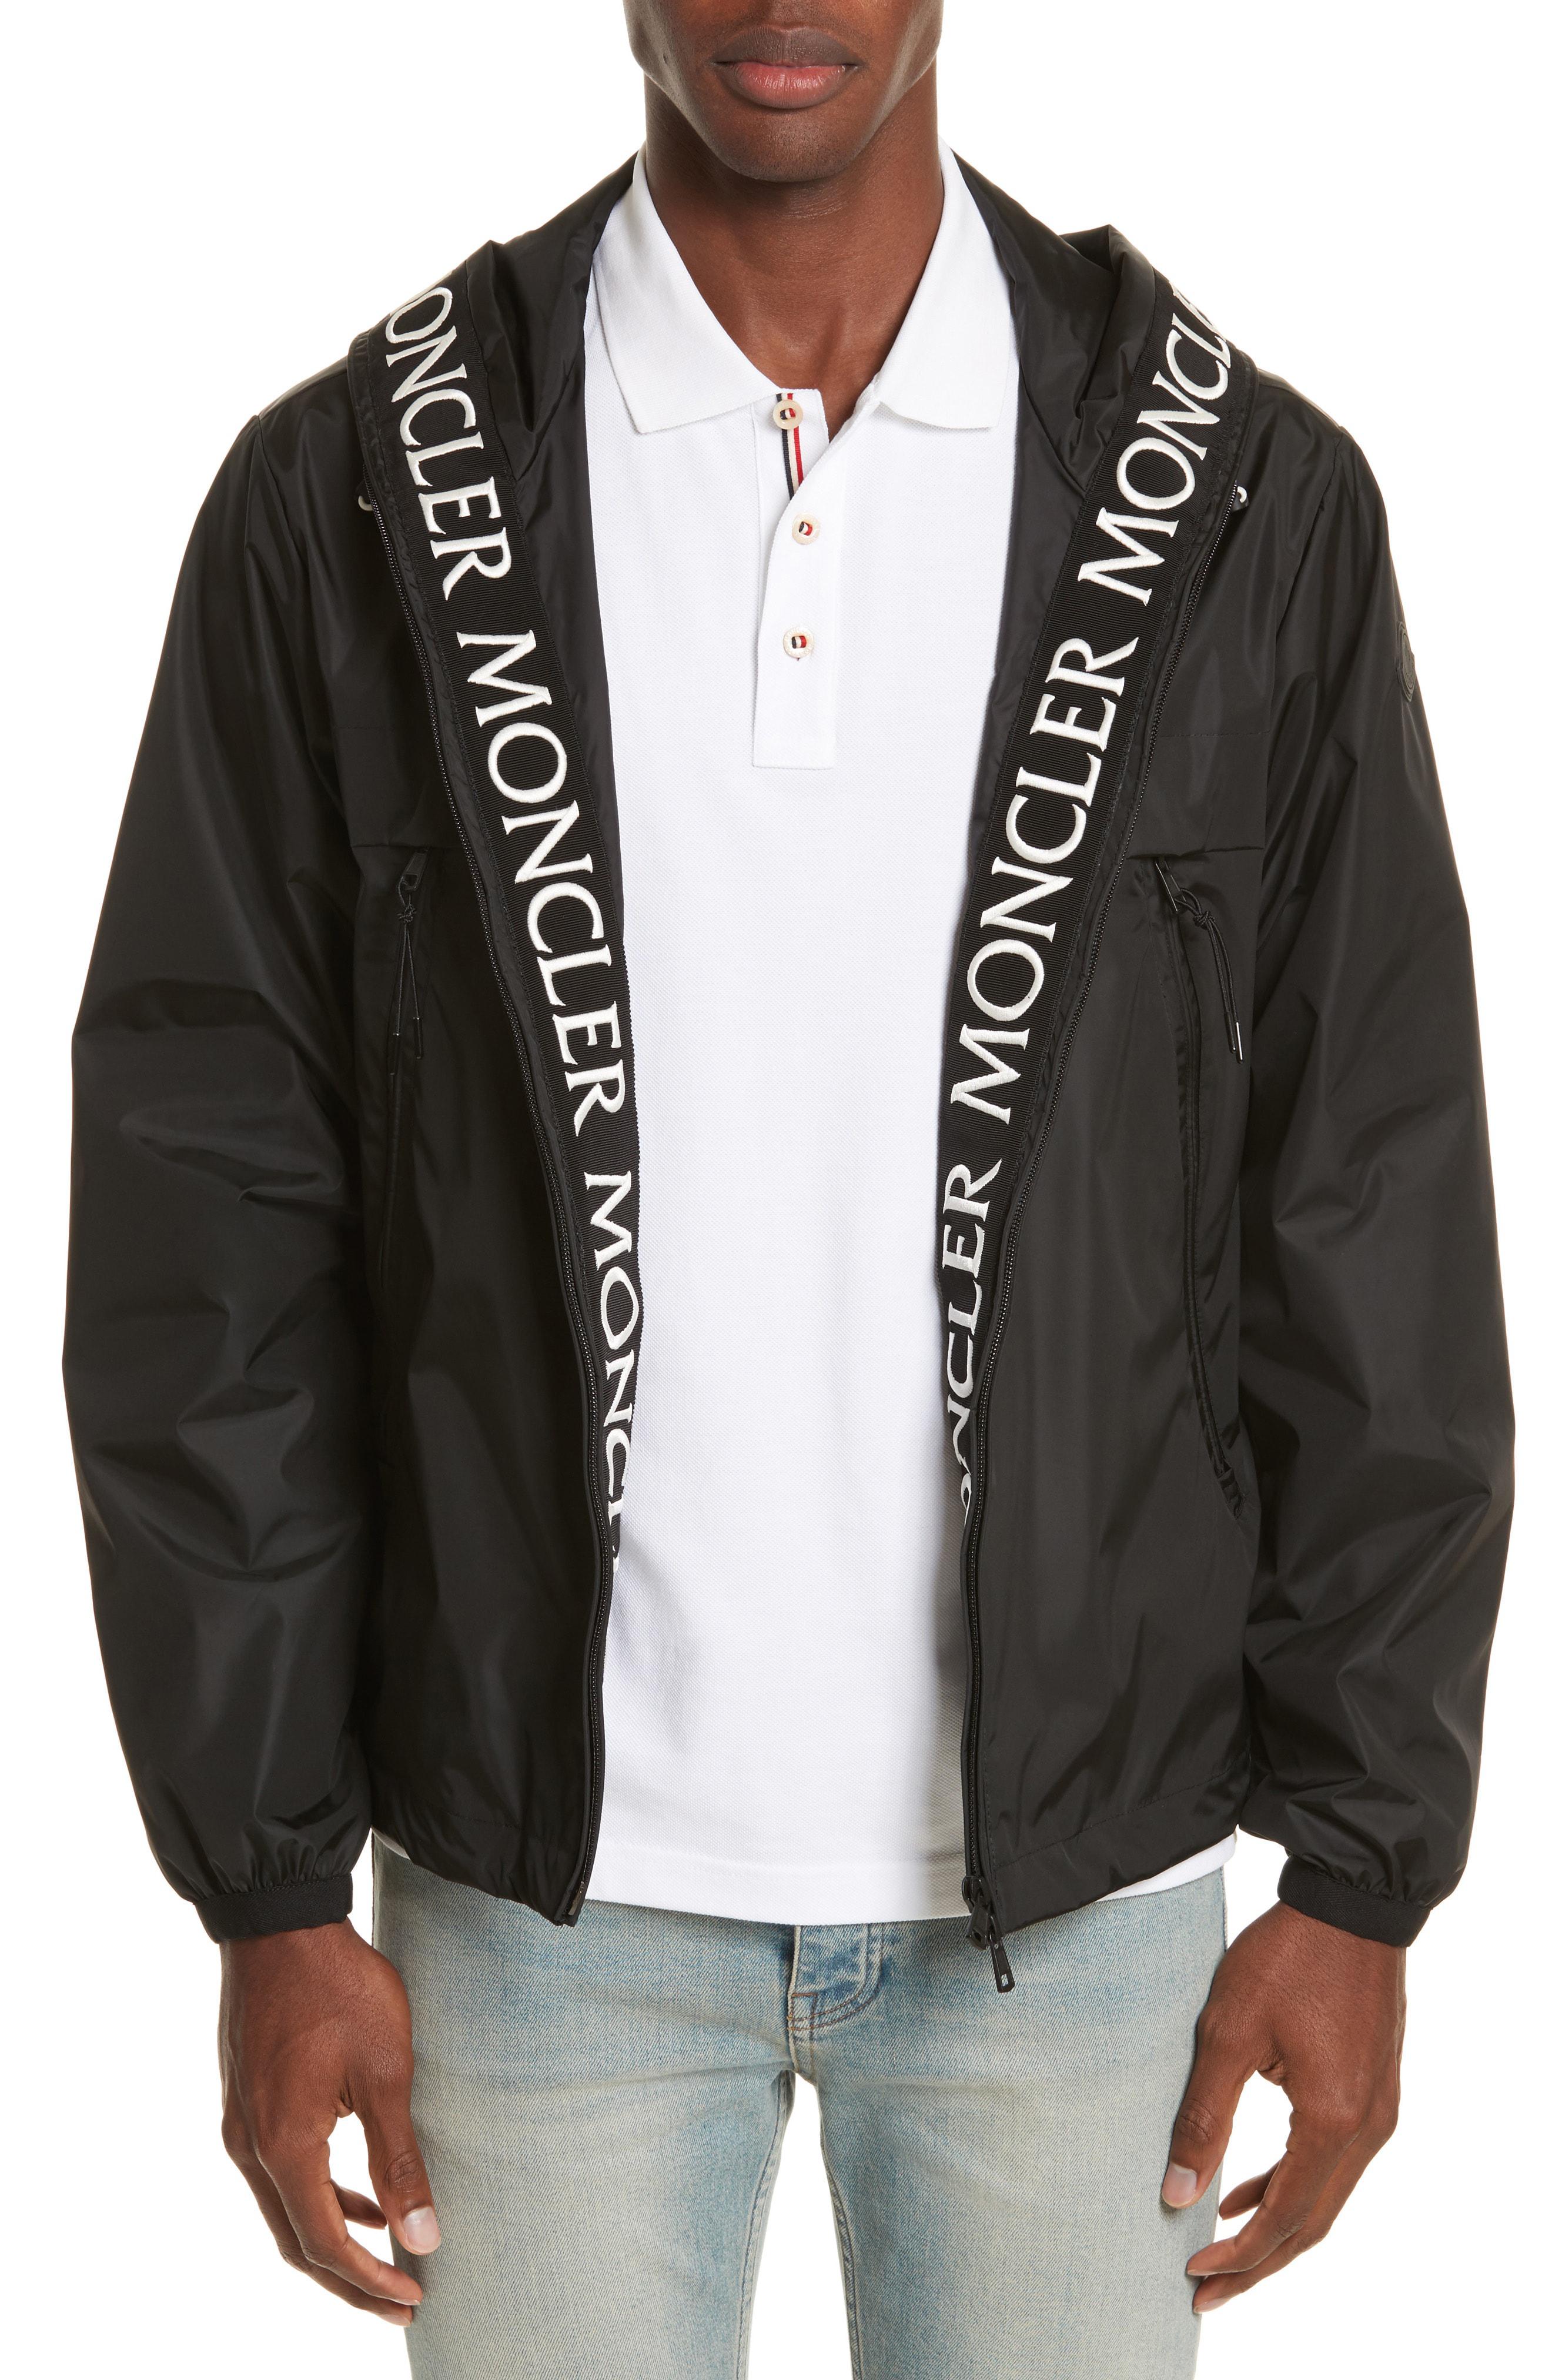 Moncler Synthetic Massereau Zip Jacket in Black for Men - Lyst